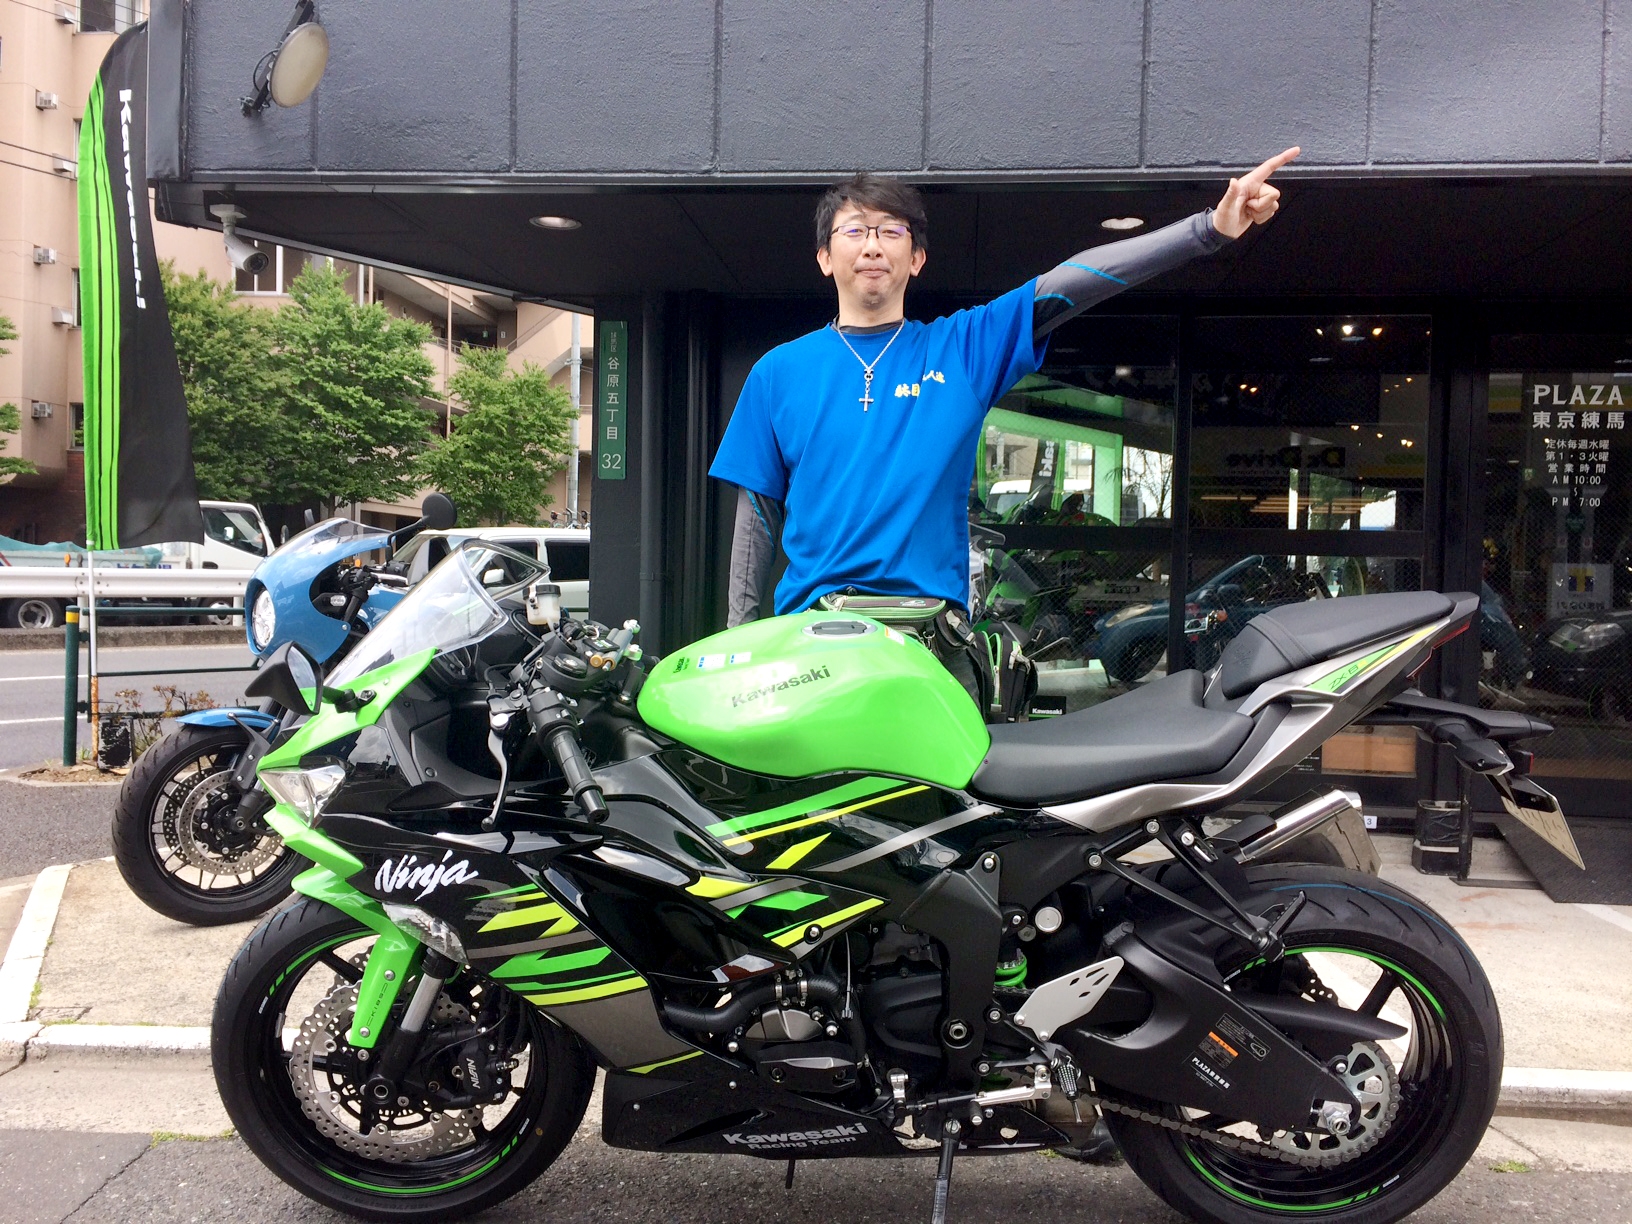 Ninja ZX-6Rご納車のお客様 | カワサキプラザ東京練馬-バイク販売